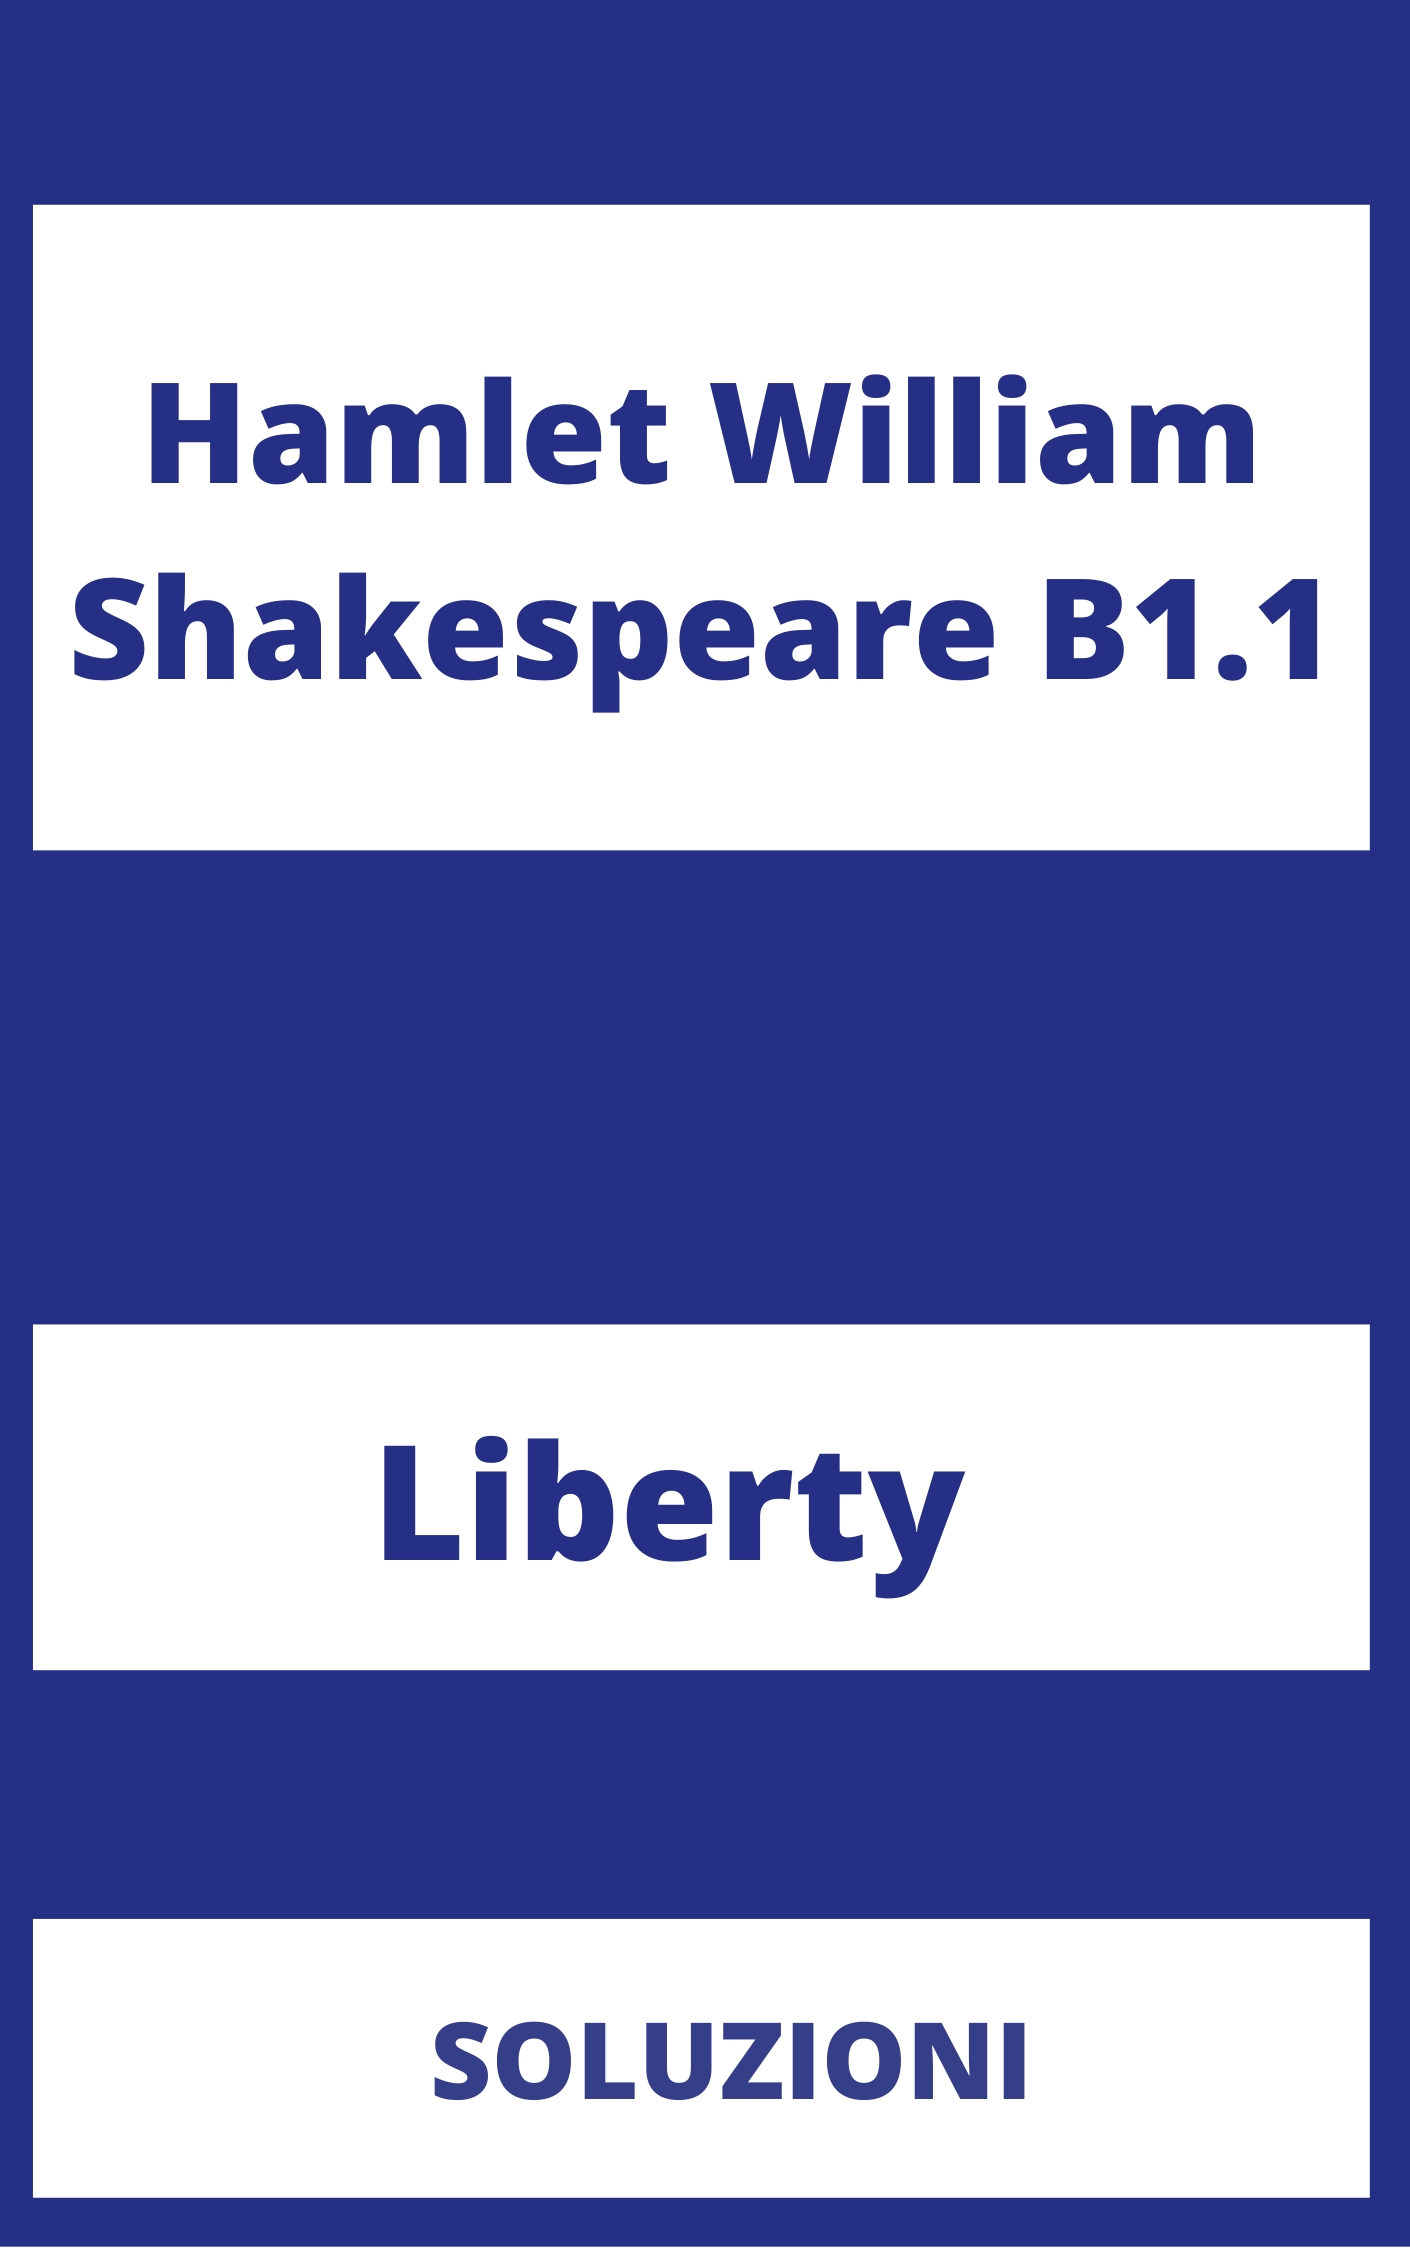 Hamlet William Shakespeare B1.1